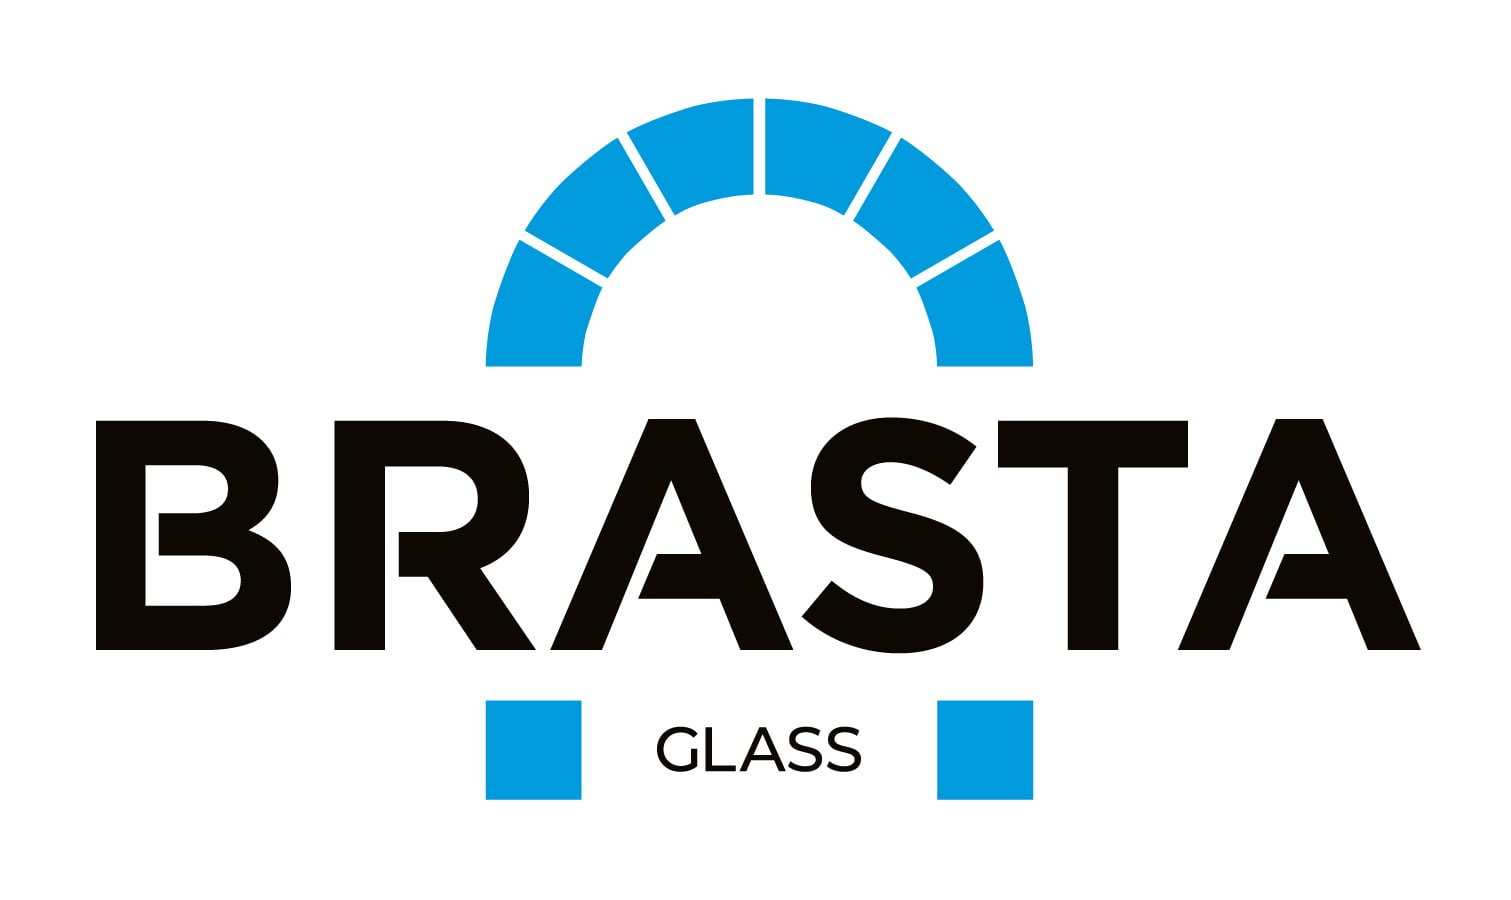 BRASTA logo glass